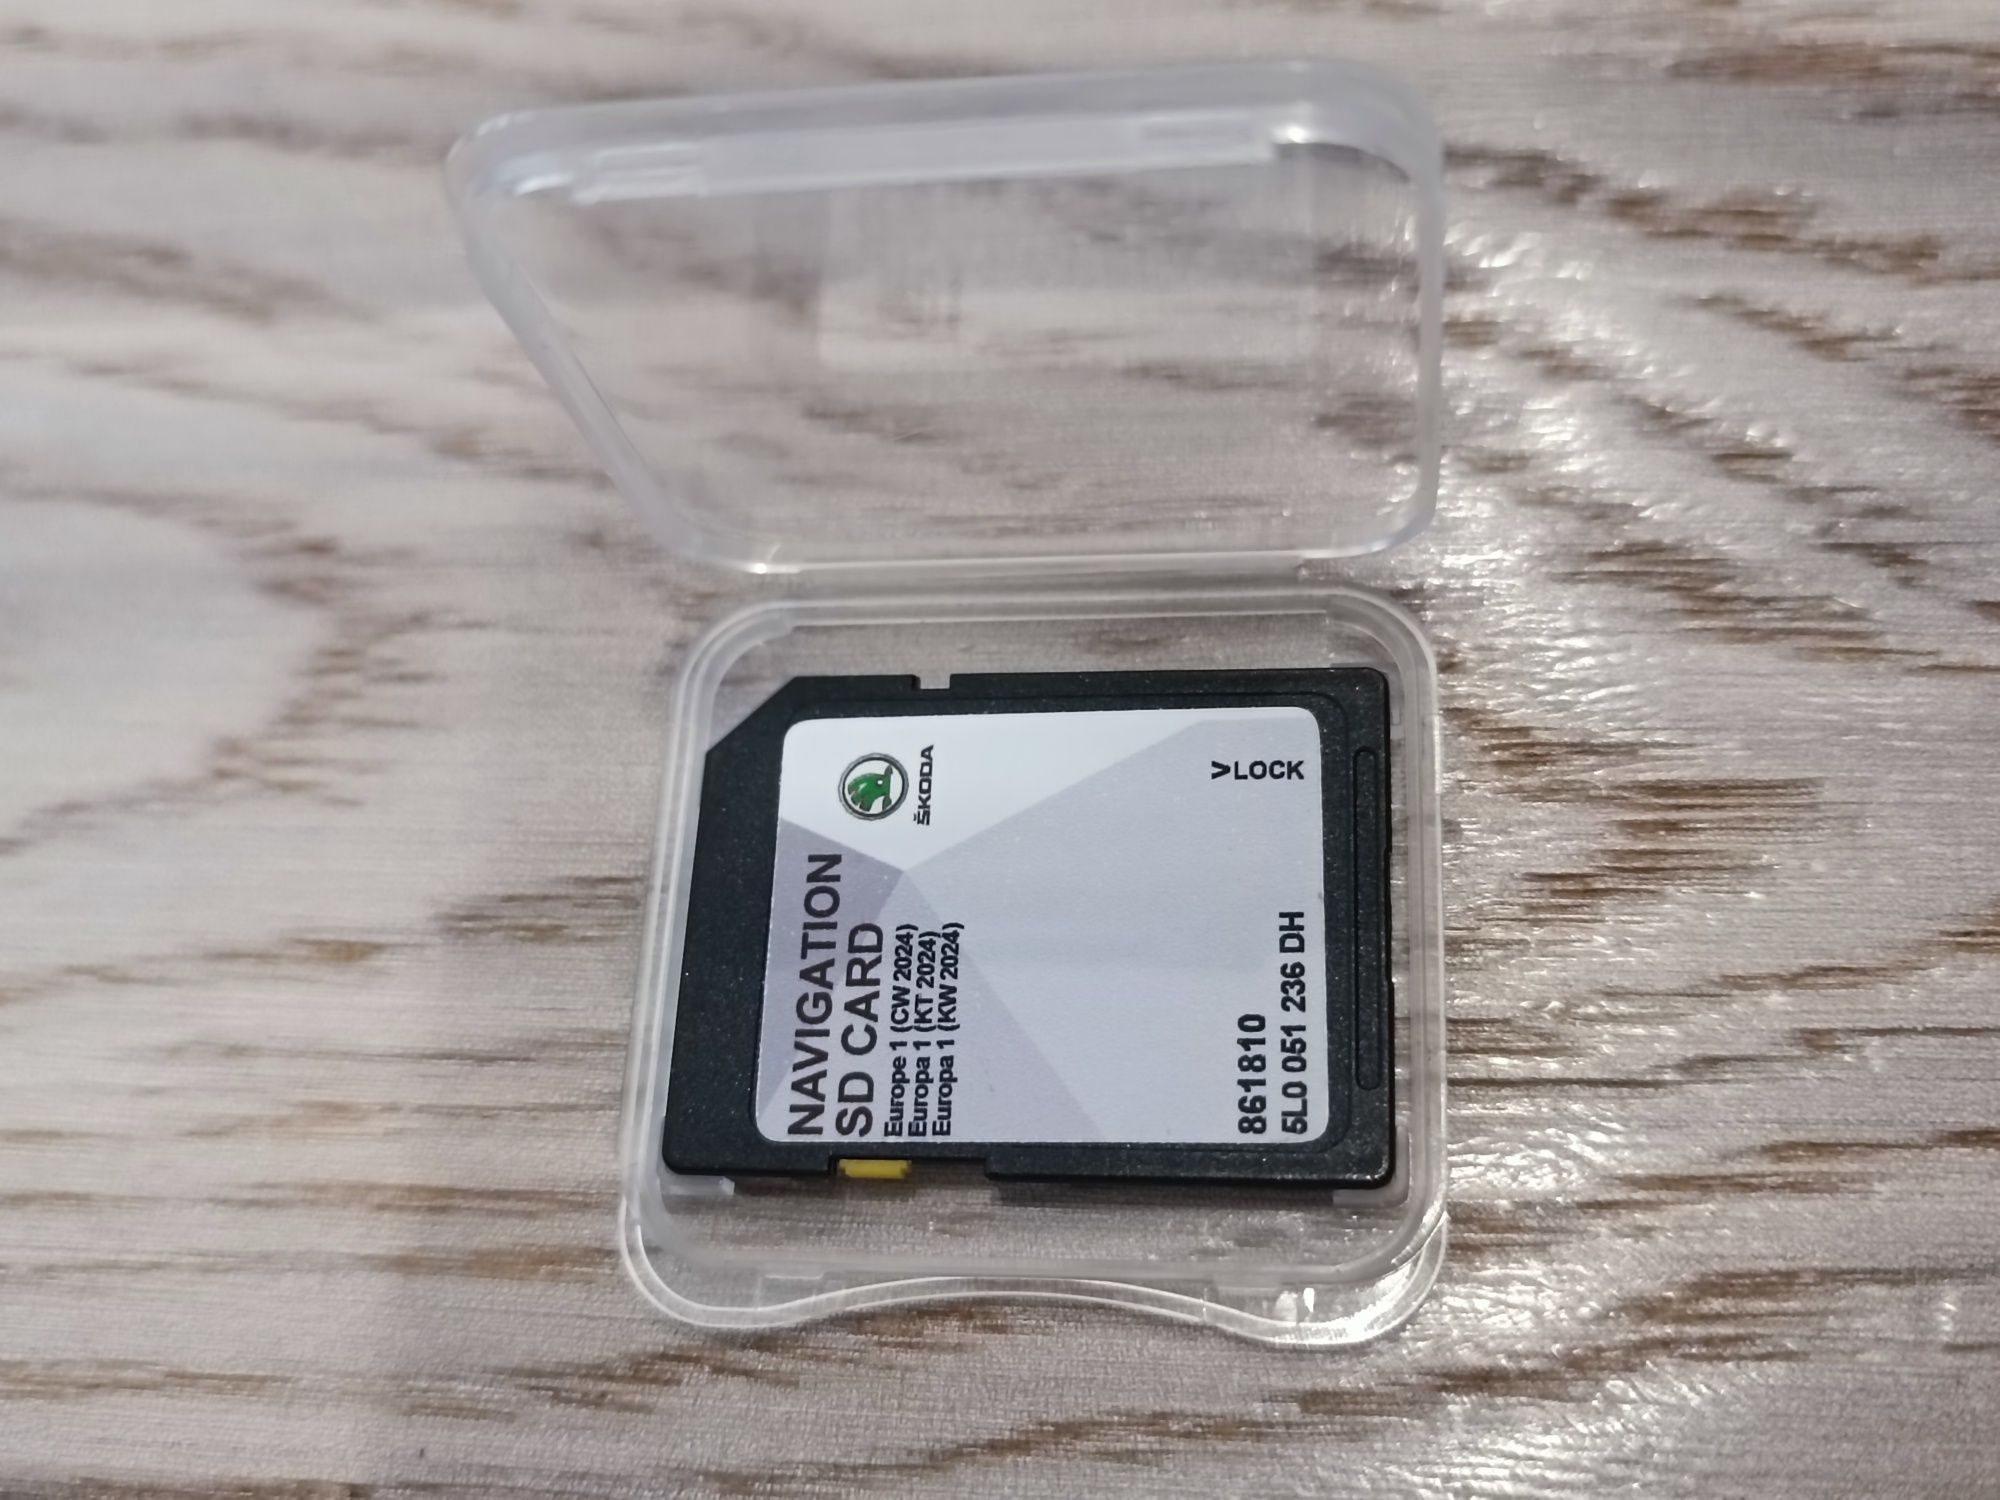 SD card navigatie Skoda 32 GB, full Europa, MIB2 Admunsen, Columbus